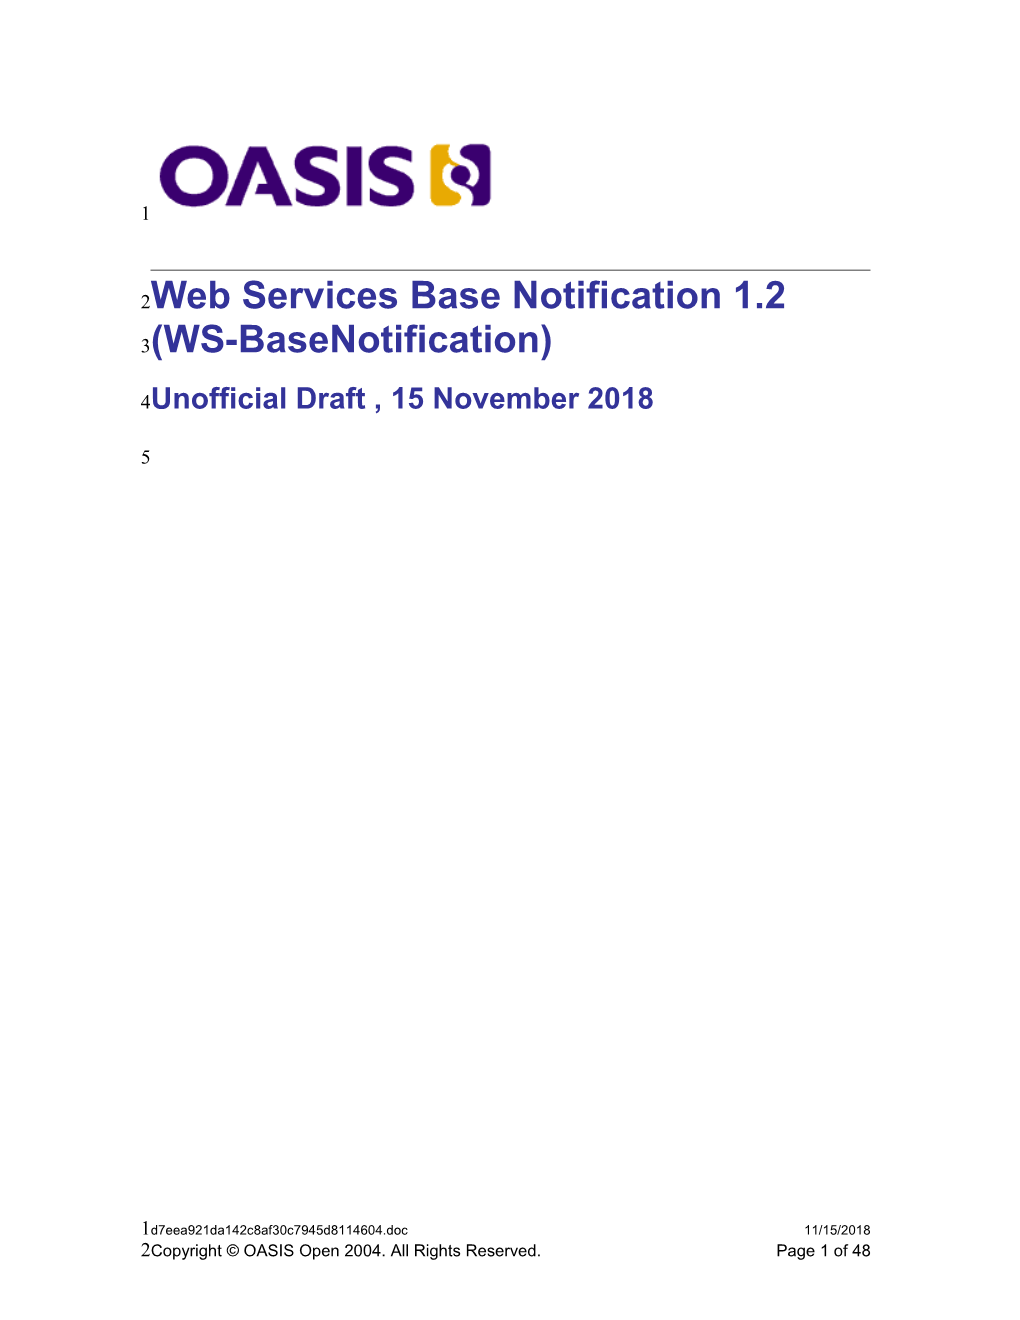 Web Services Base Notification 1.2 (WS-Basenotification)